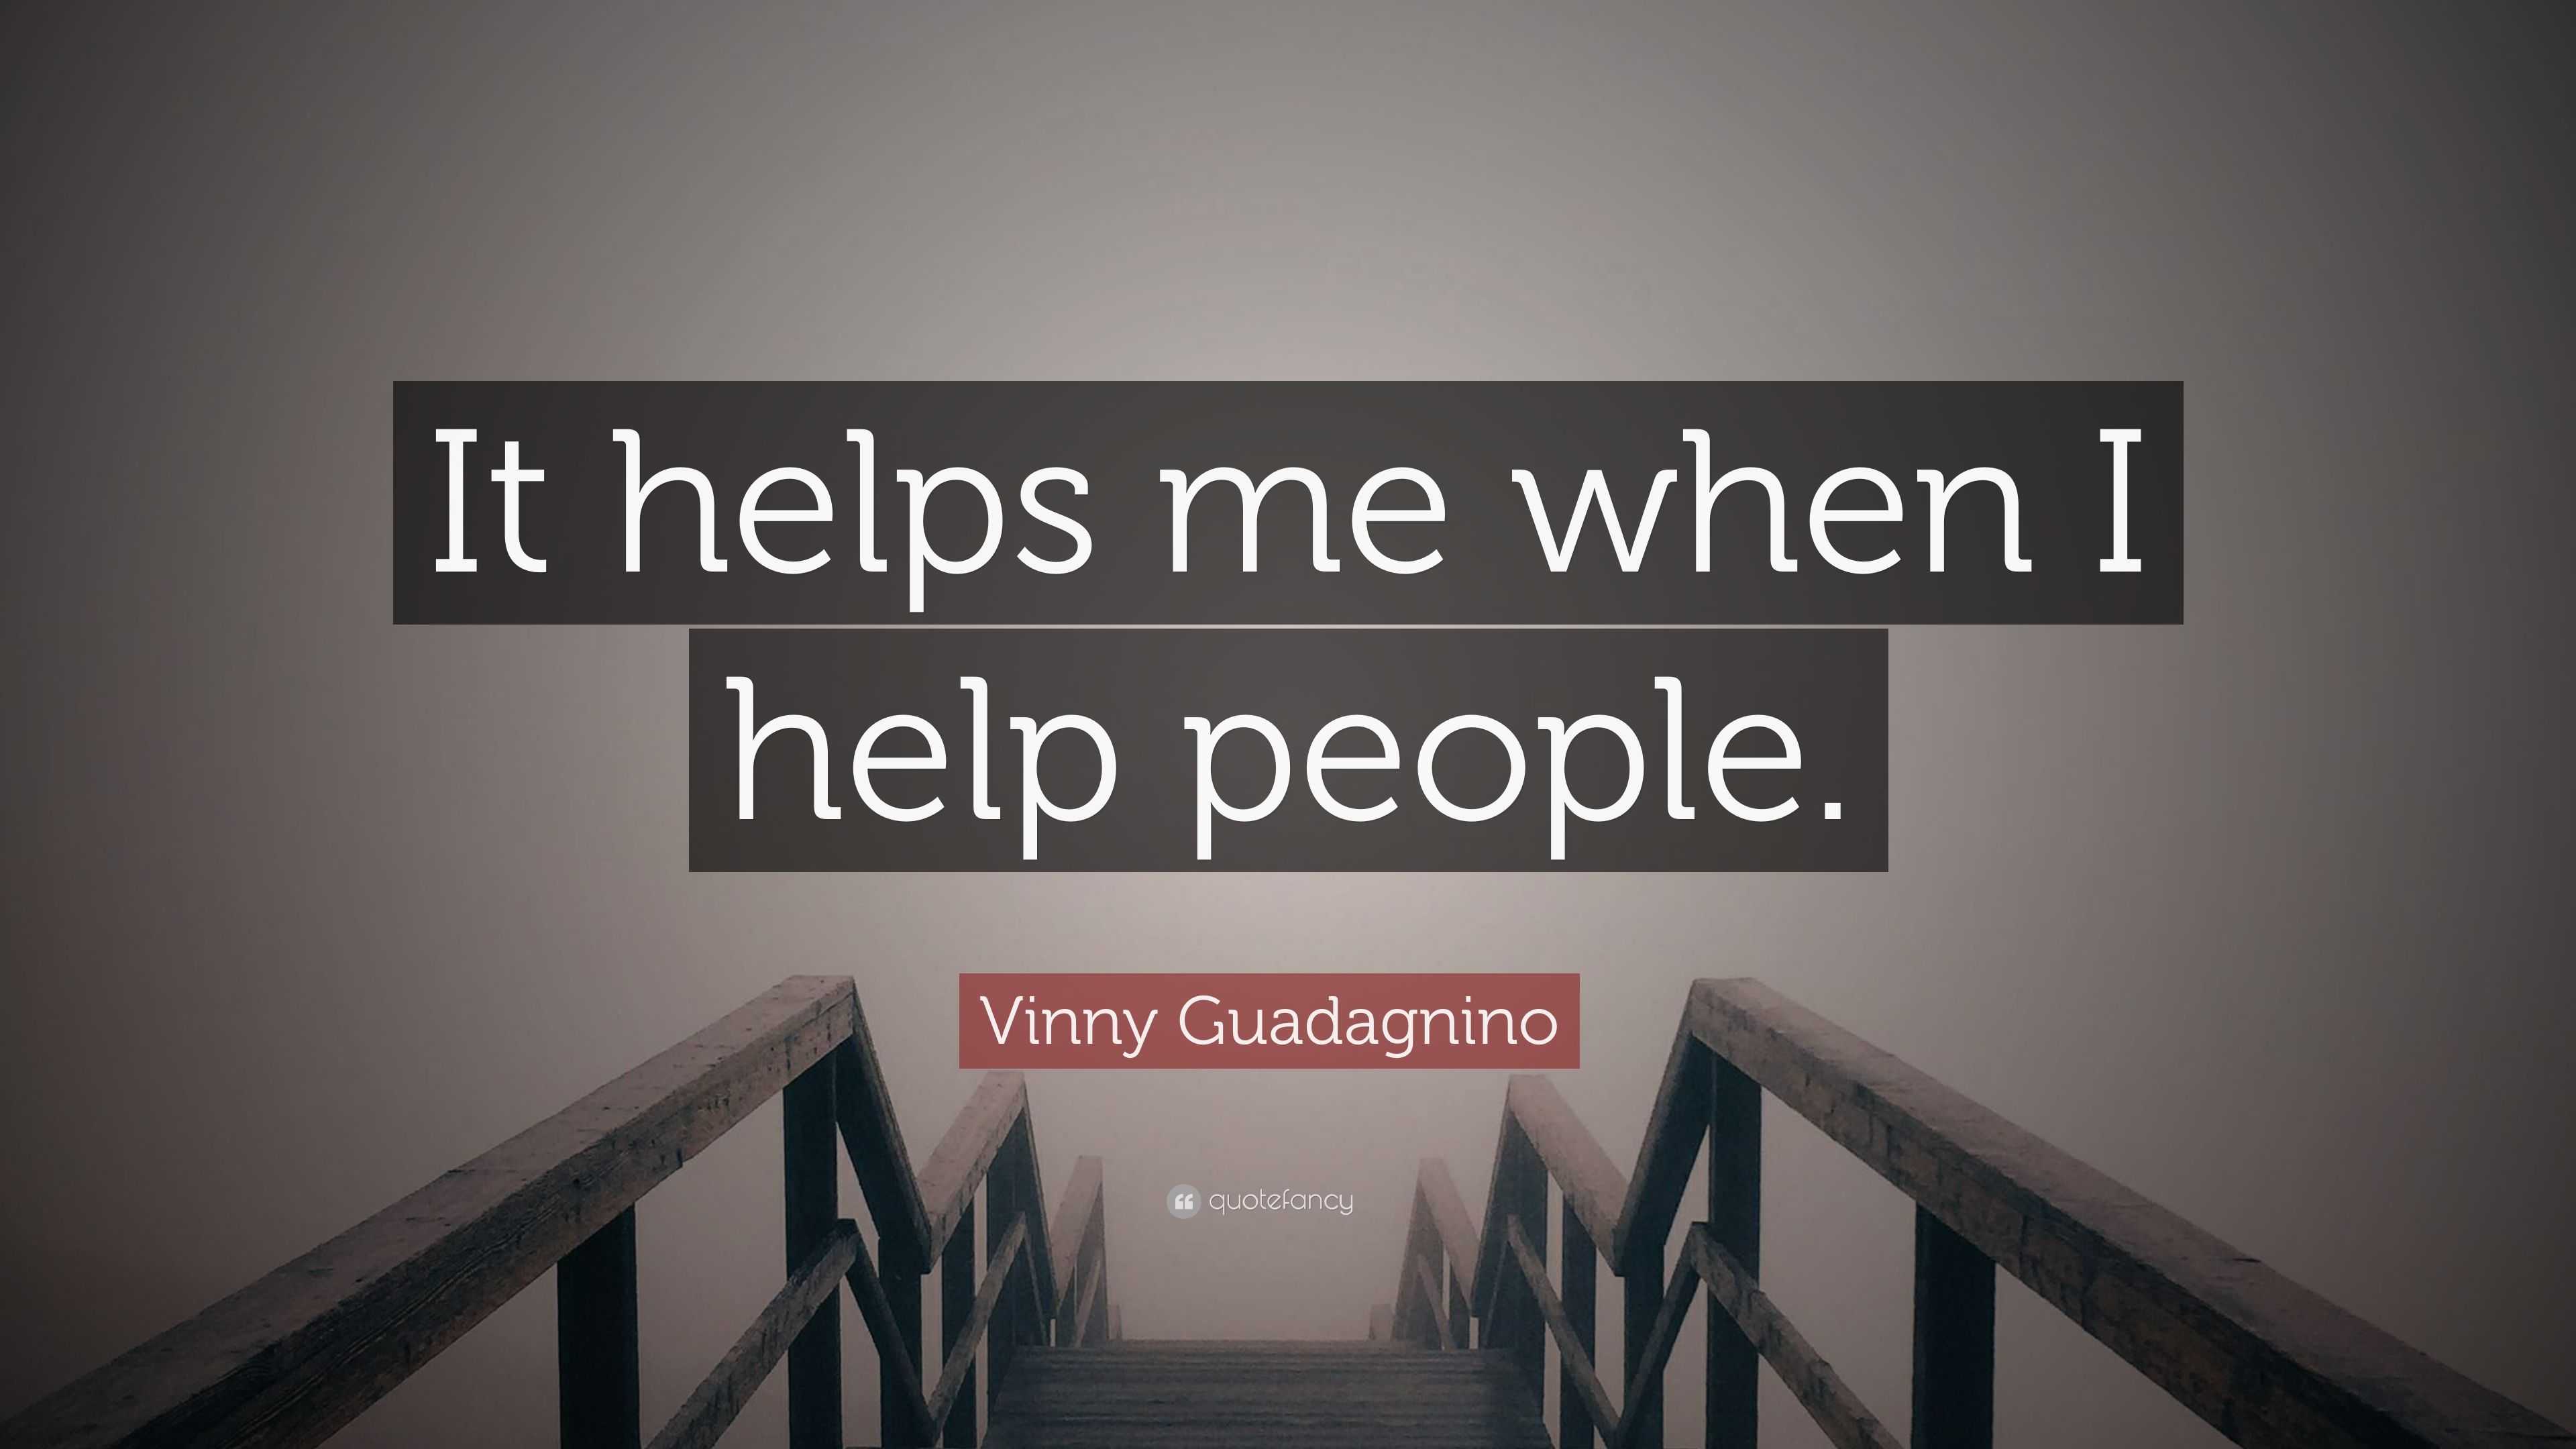 Vinny Guadagnino Quote: “It helps me